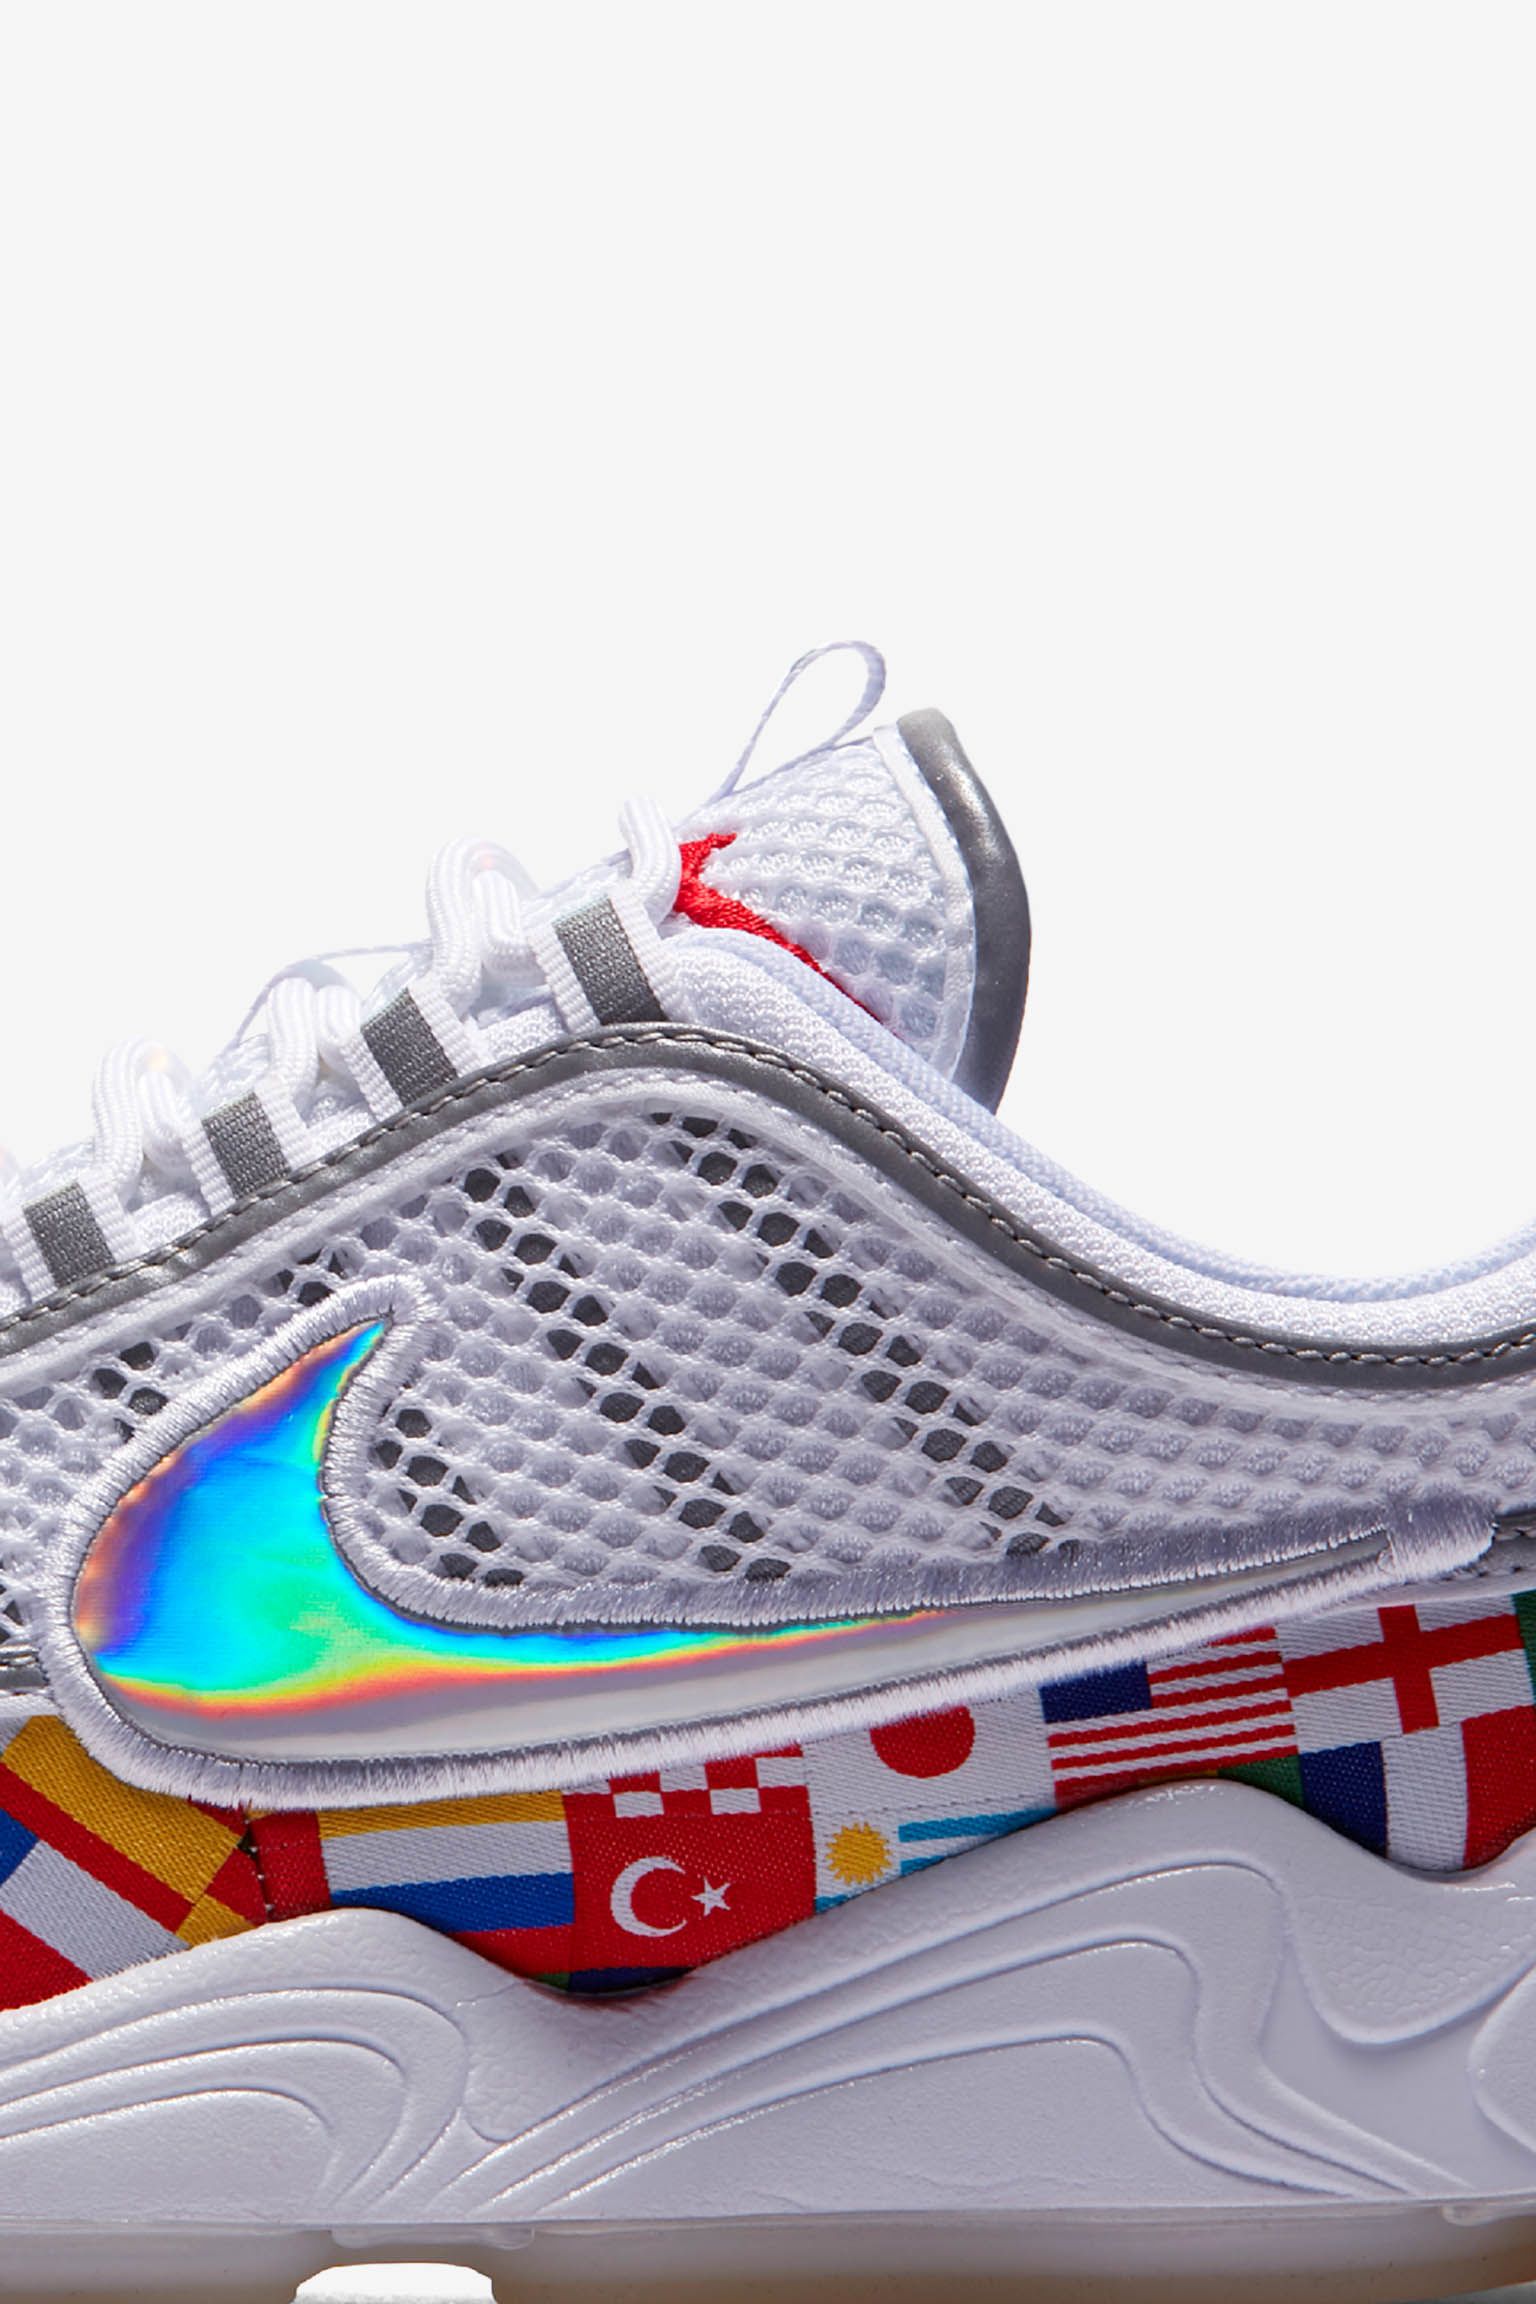 Cementerio aprendiz intelectual Nike Air Zoom Spiridon 'White & Multicolor' Release Date. Nike SNKRS